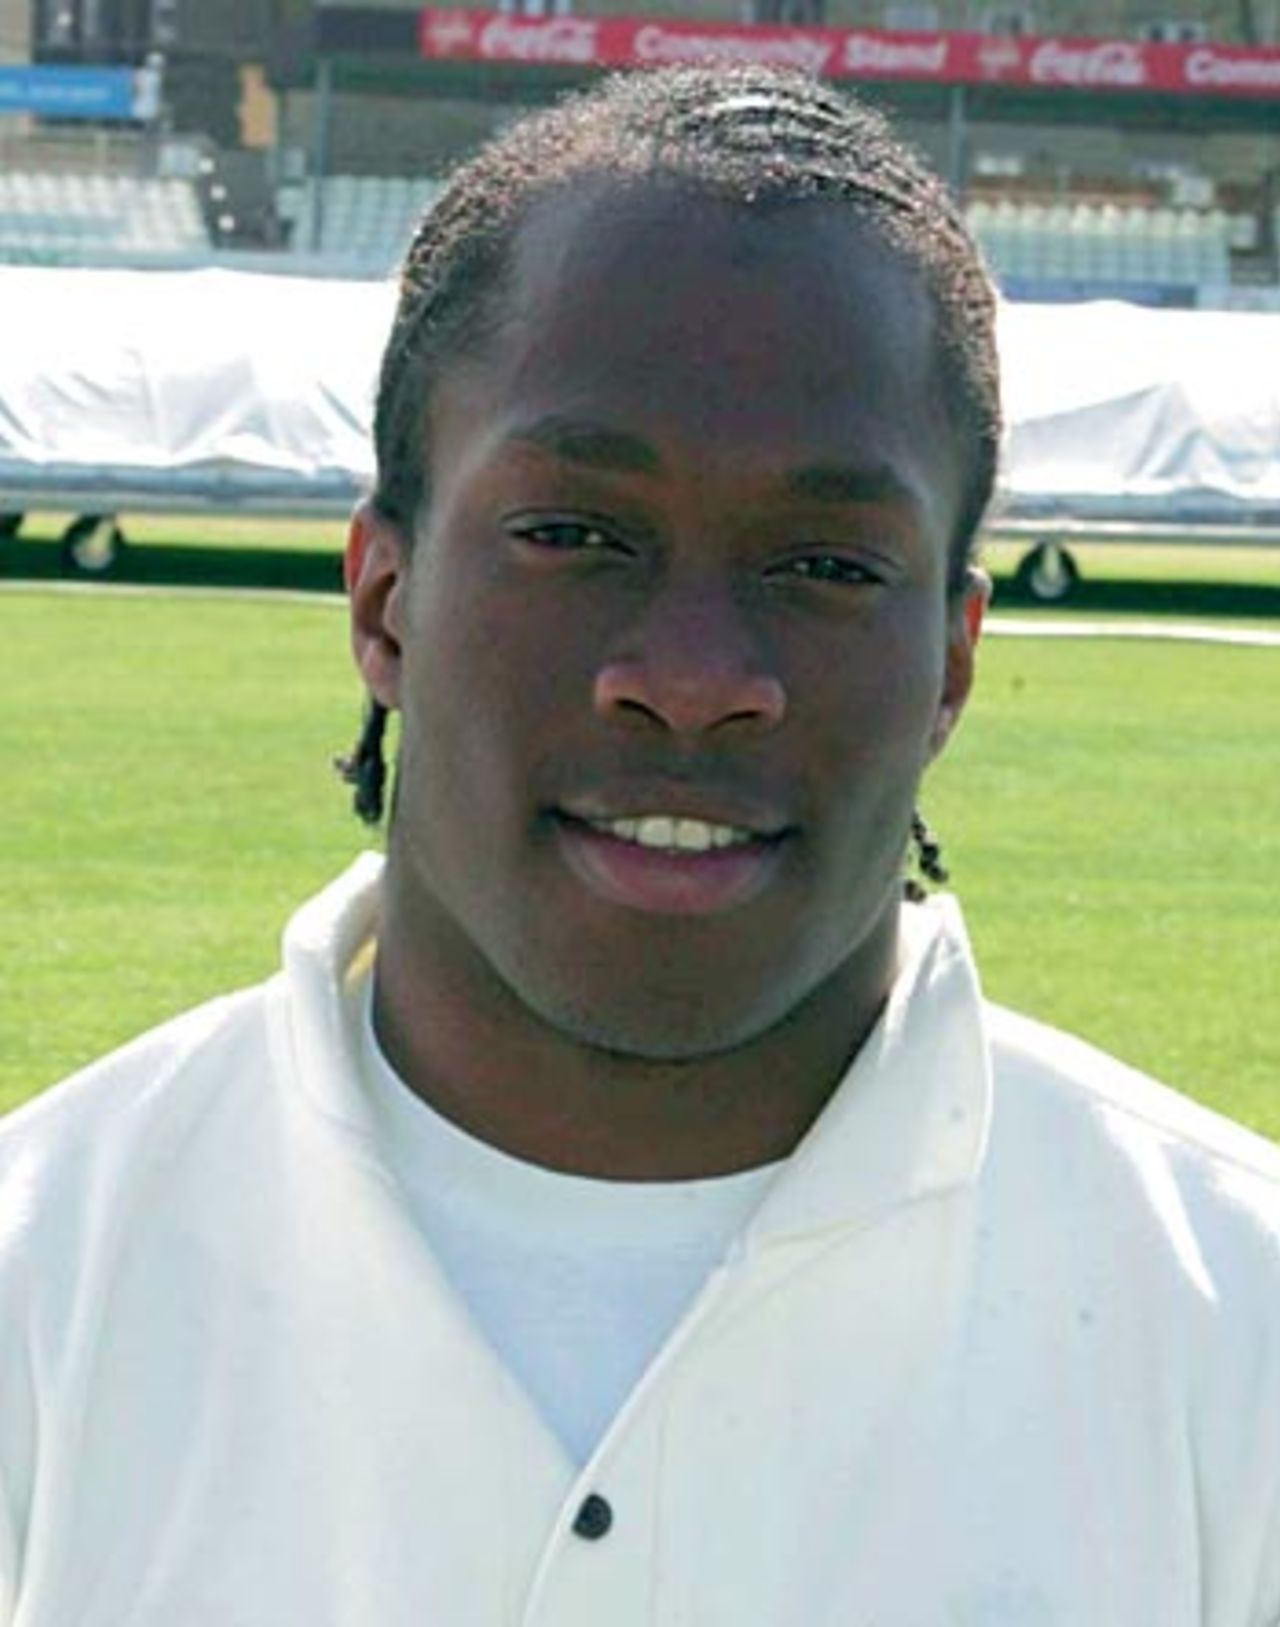 Maurice Chambers player portrait, 2006